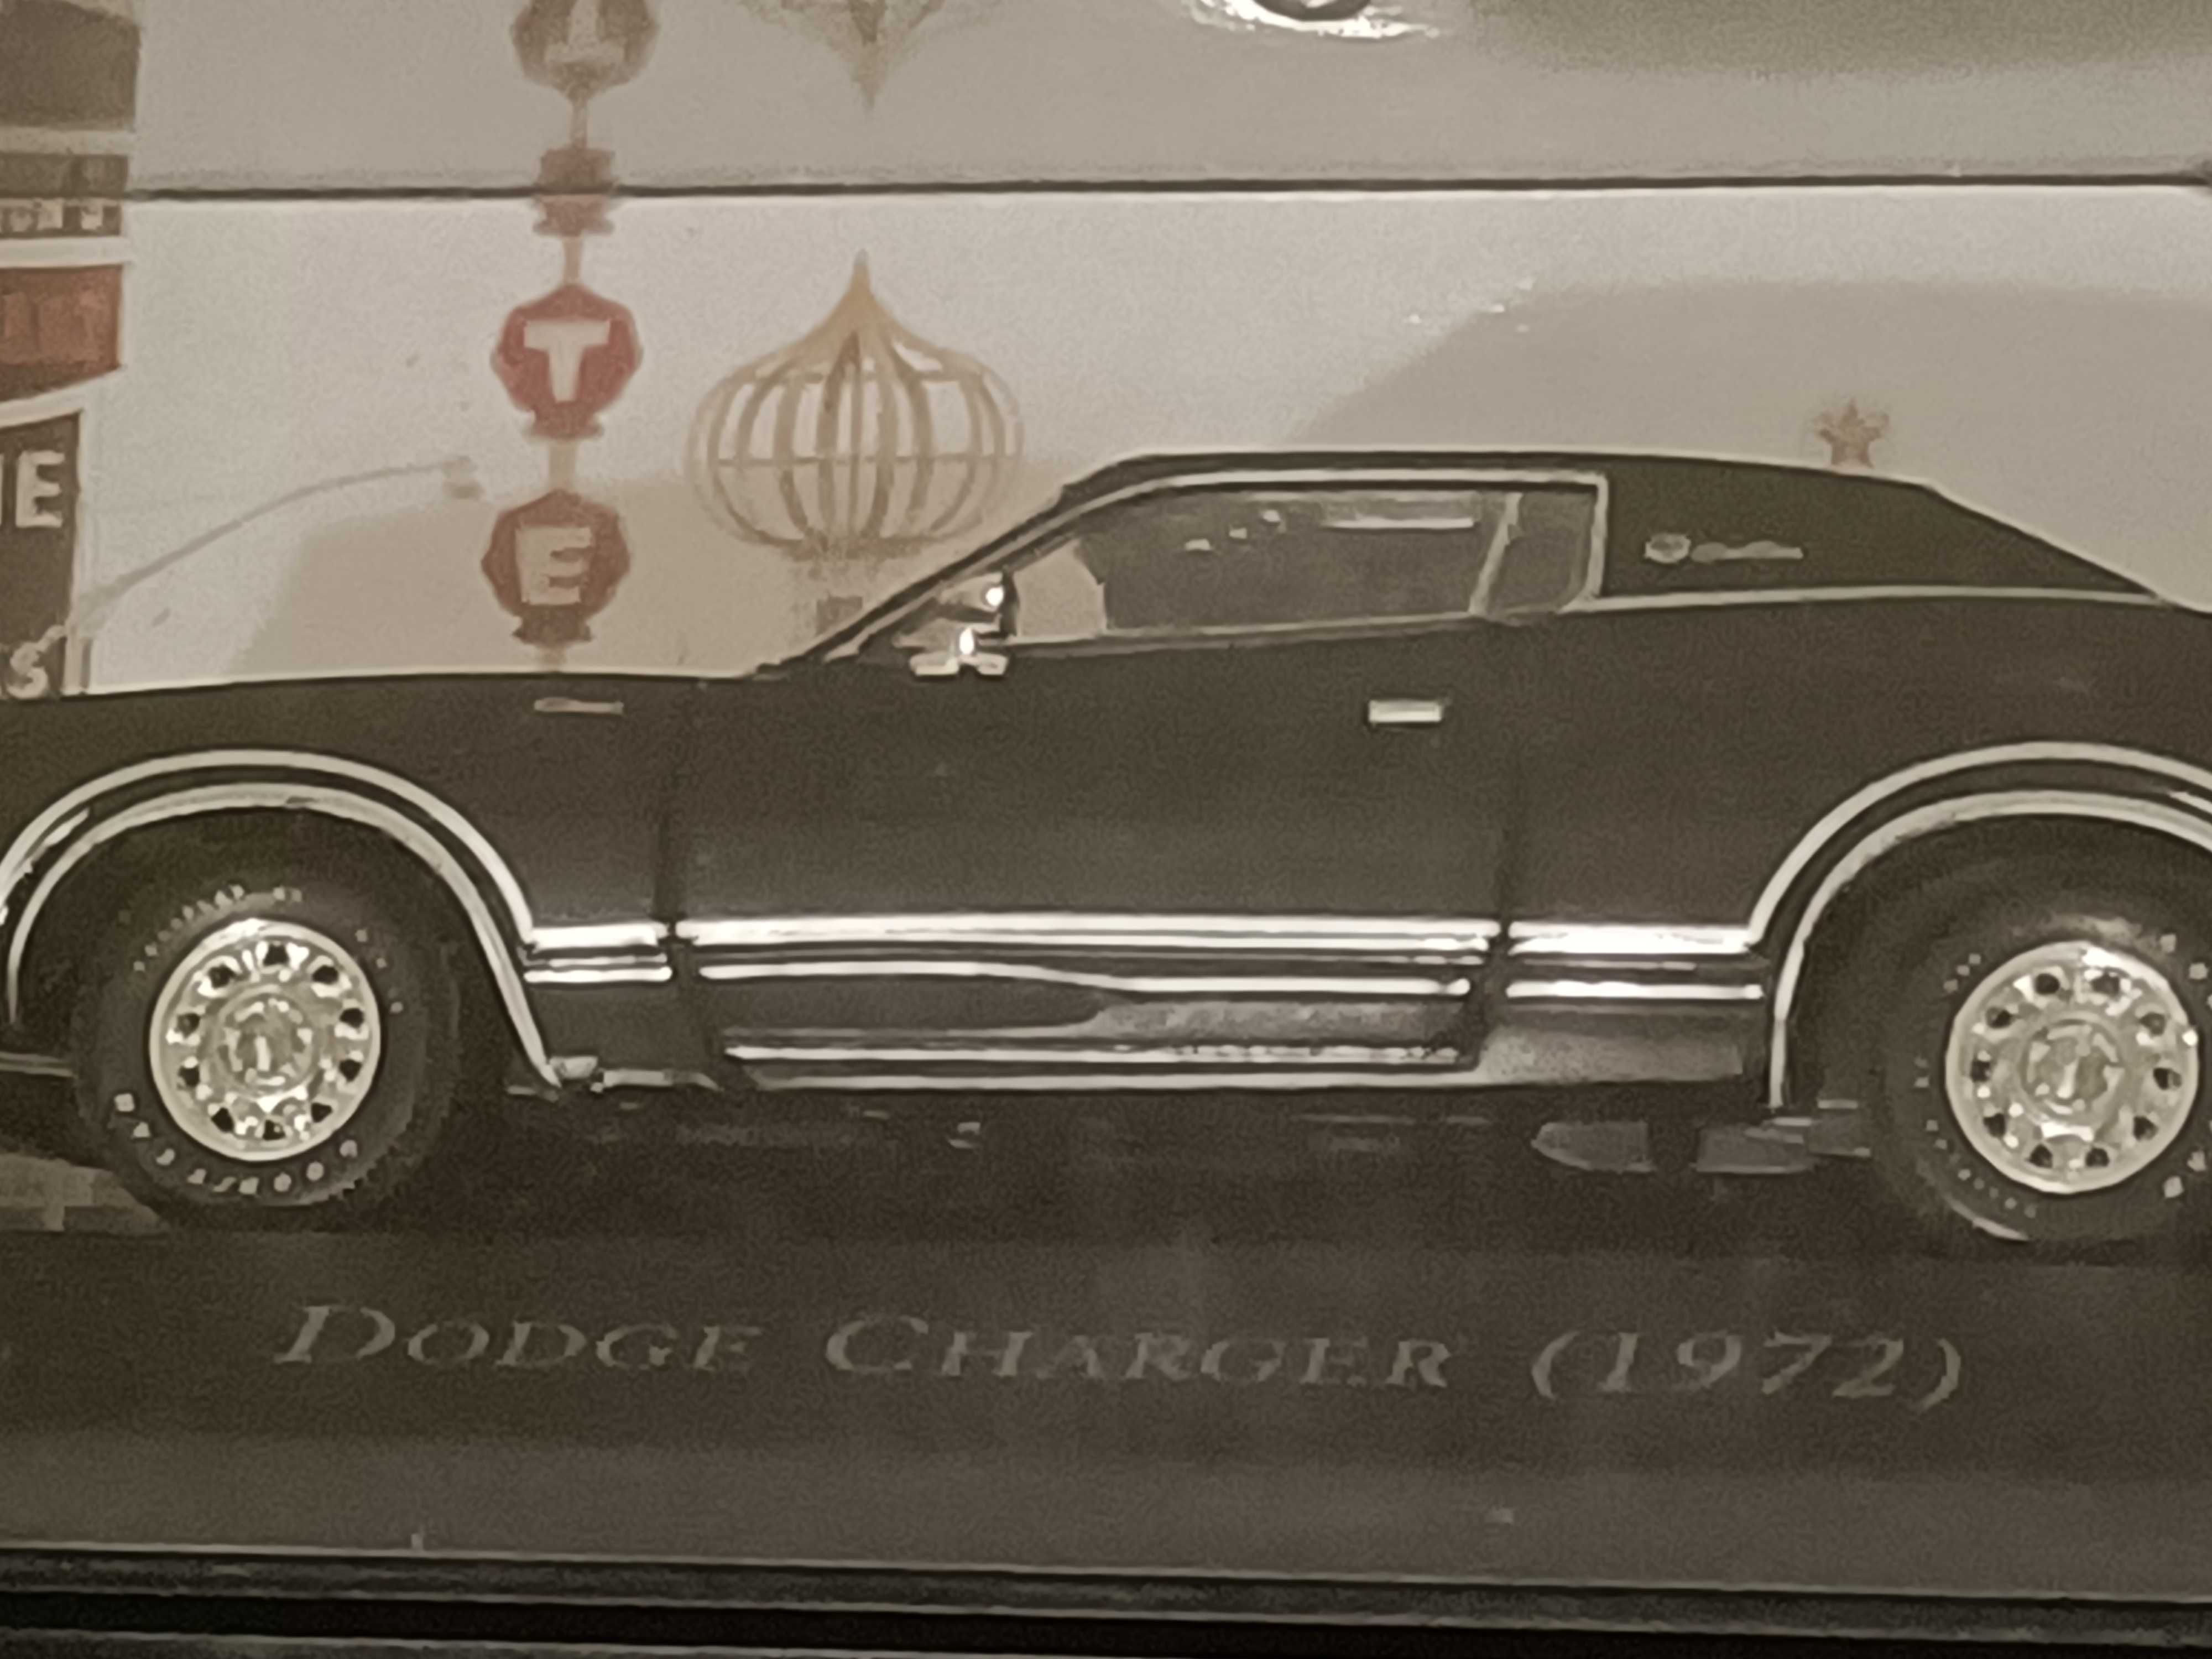 Miniatura de automóvel Dodge Charger, de 1972, à escala 1:43